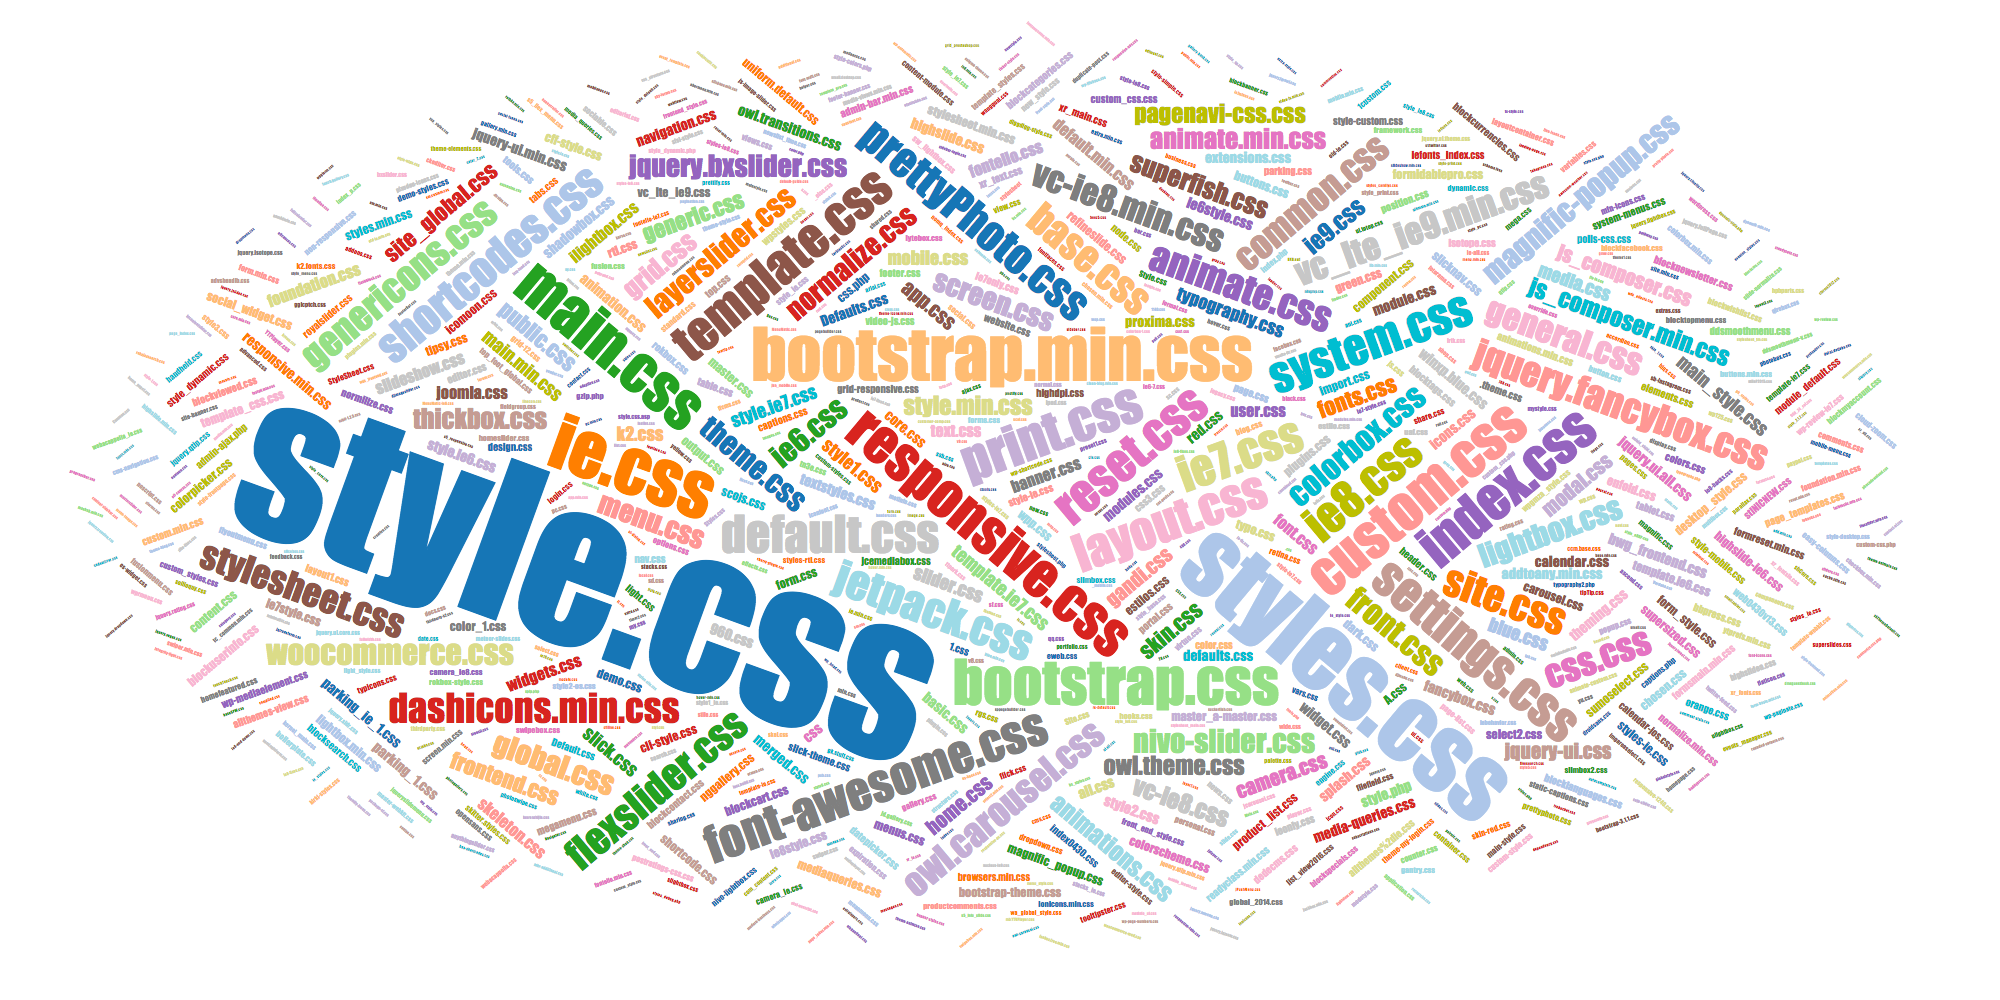 Popular names of CSS files ytprefs.min.css, yith_wcas_ajax_search.css, etc.